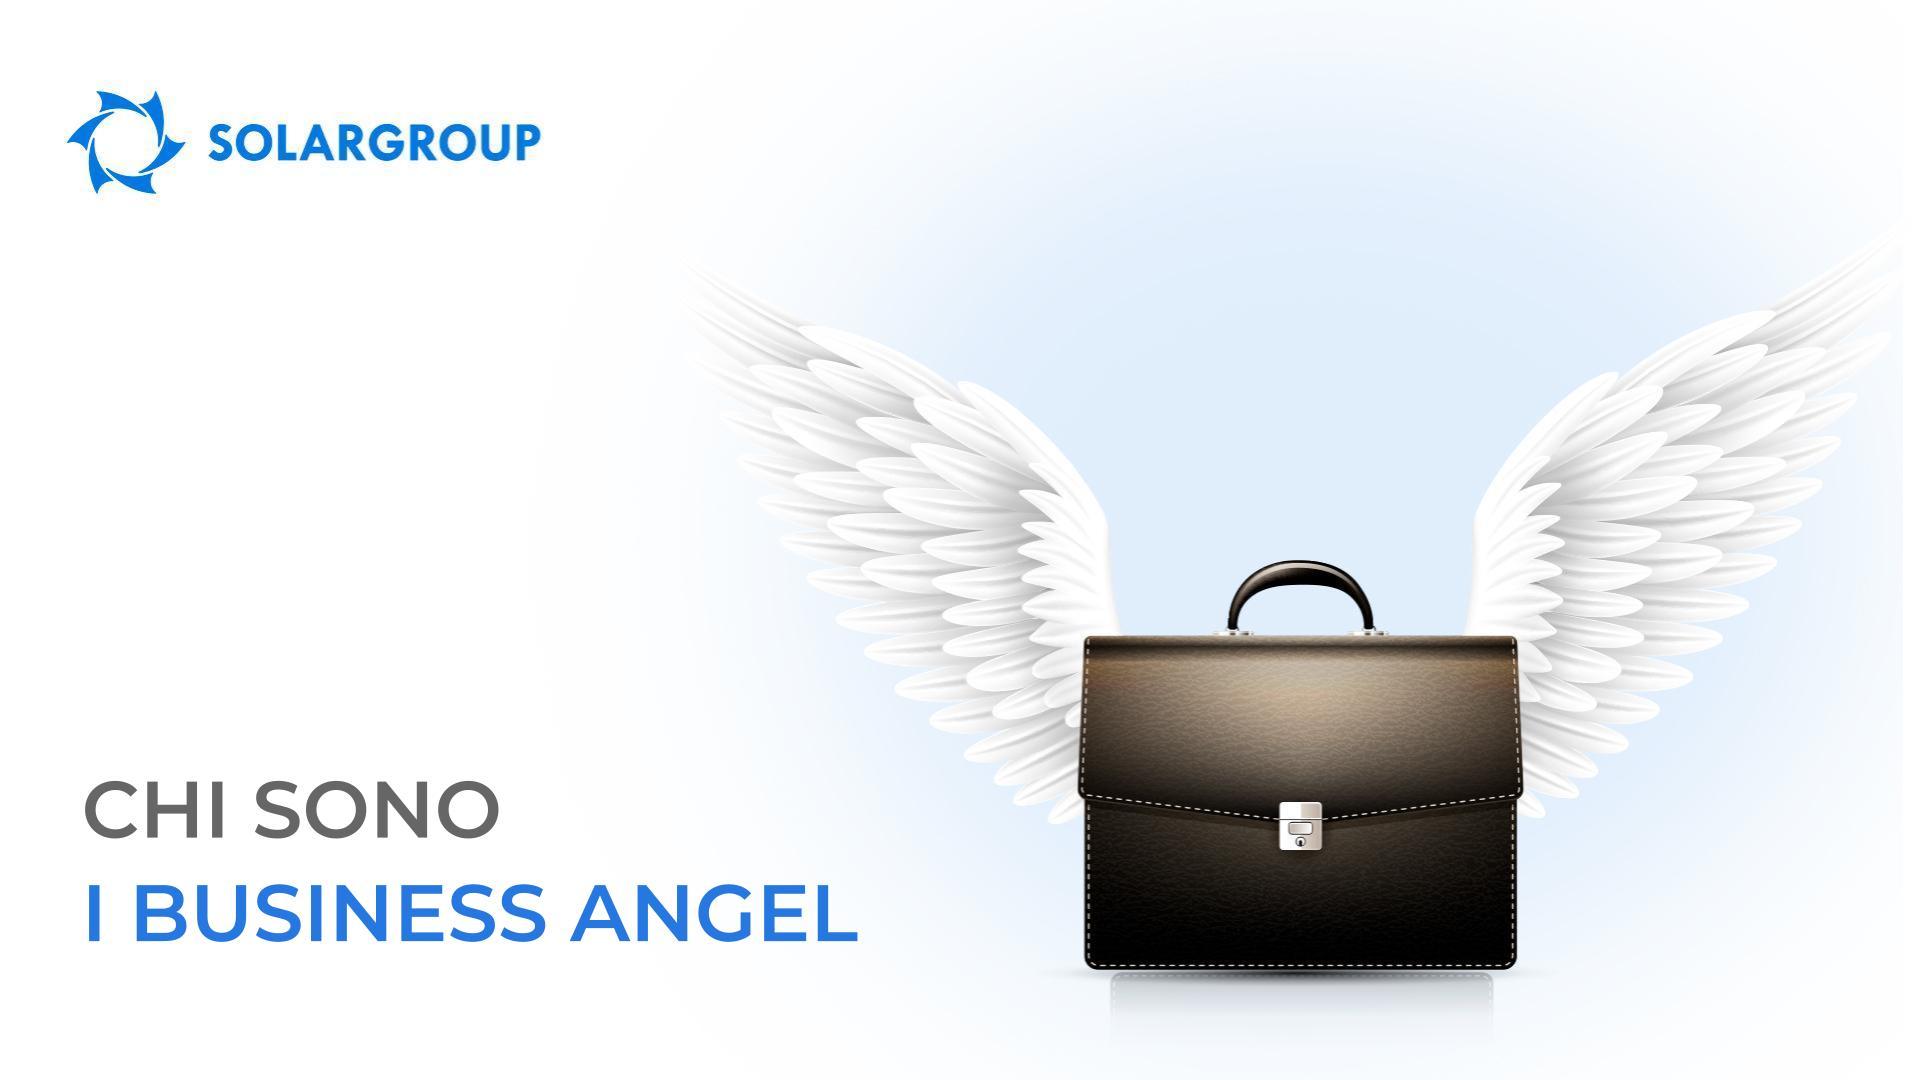 Chi sono i business angel